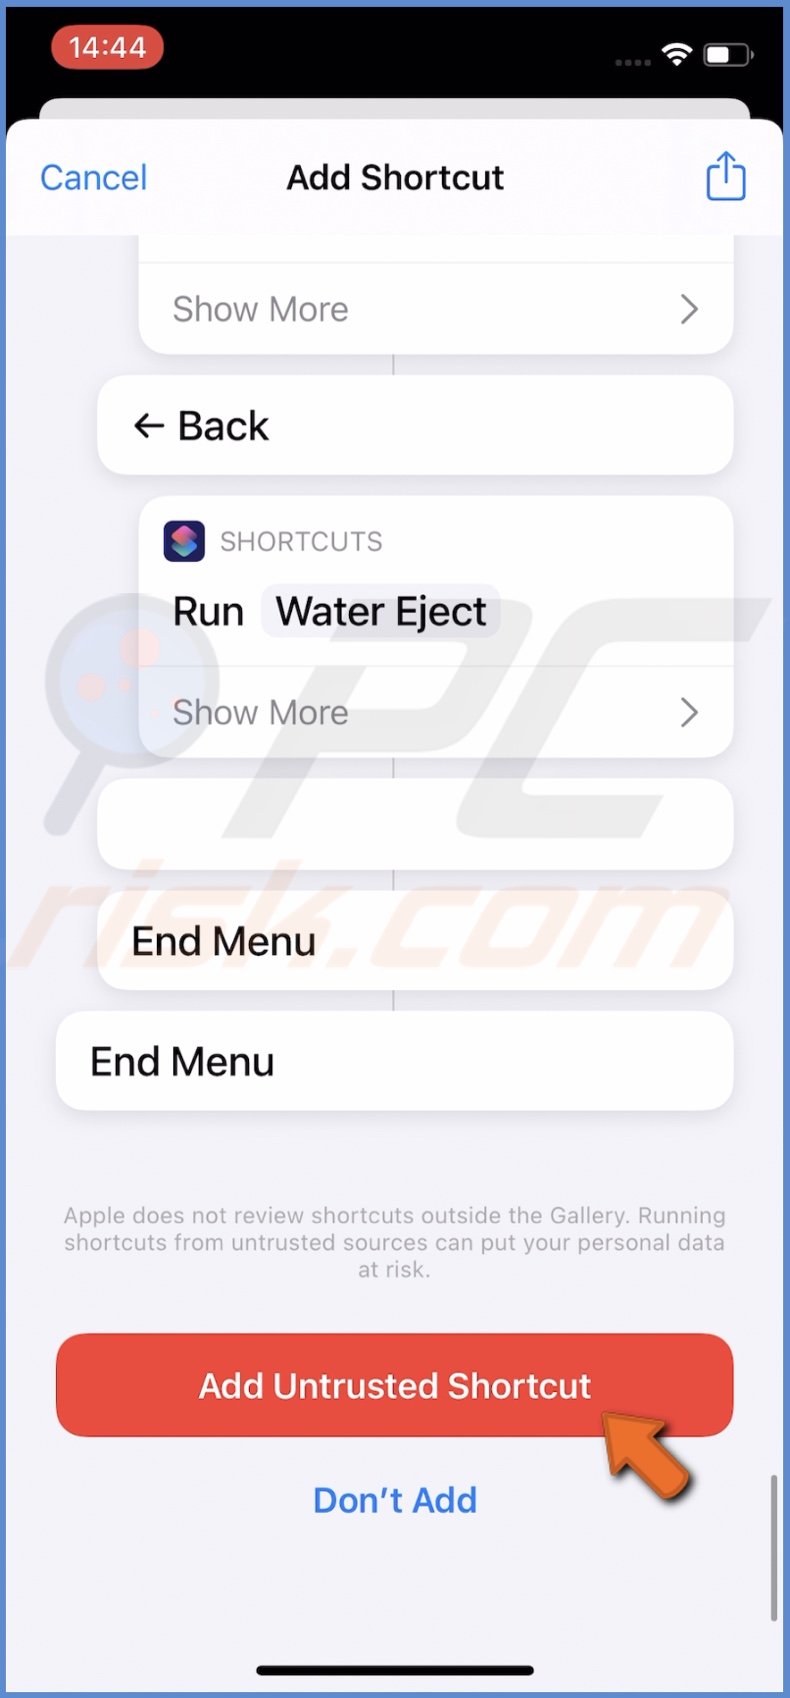 Tap on Add Untrusted Shortcut